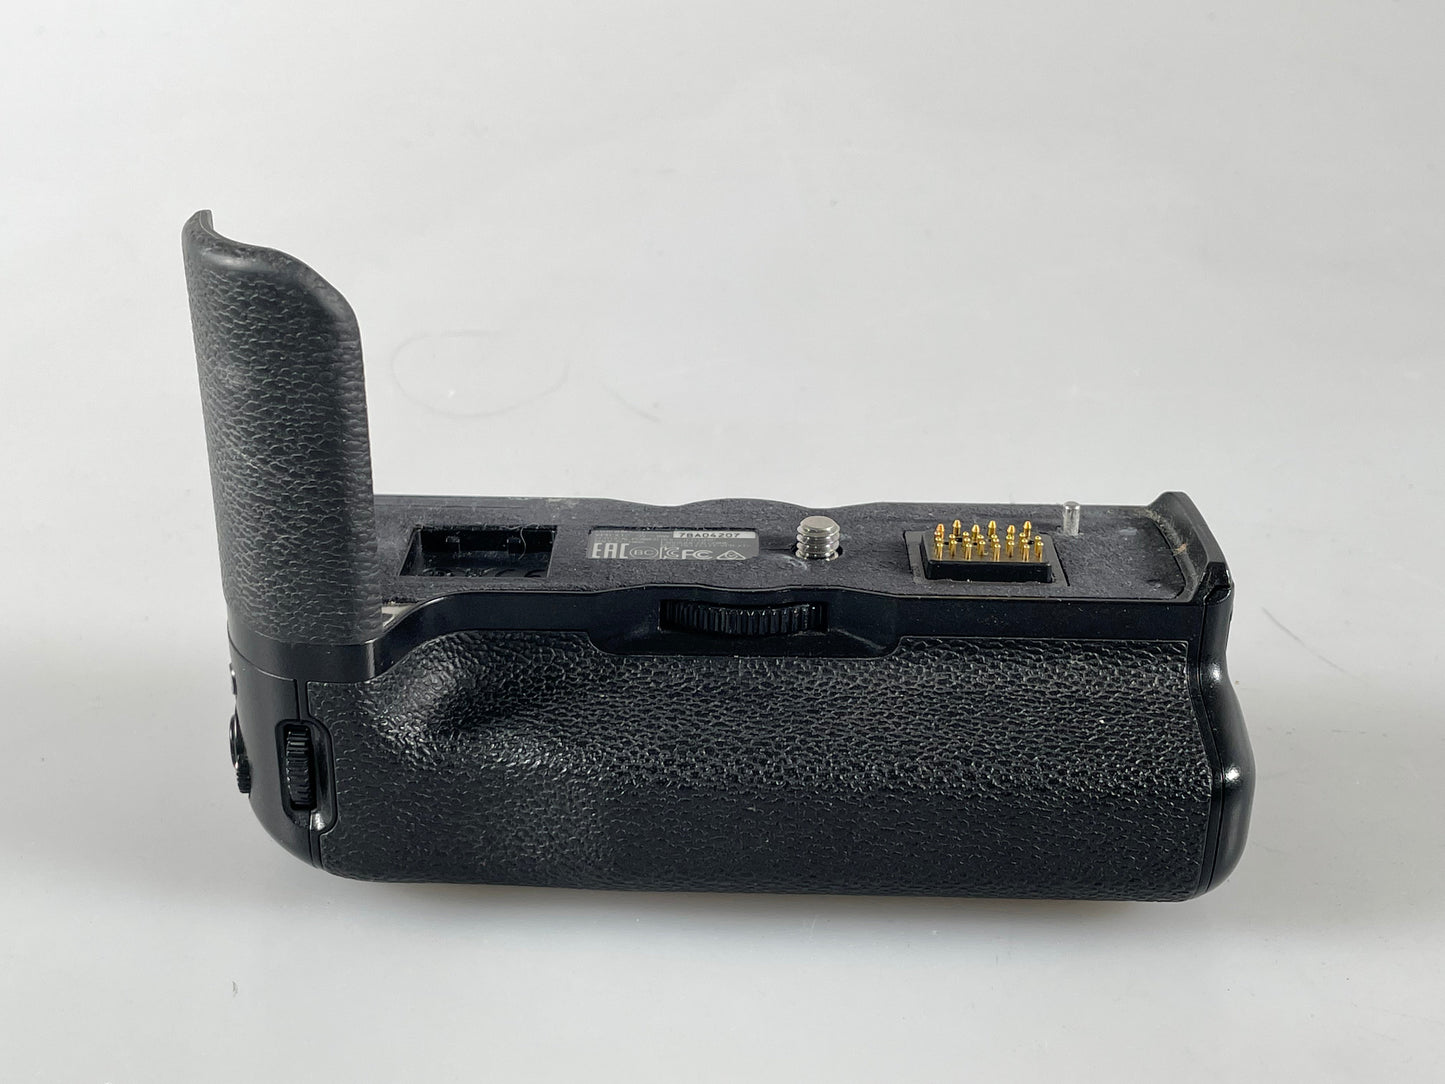 Fujifilm VPB-XT2 XT-2 Battery Grip Booster black